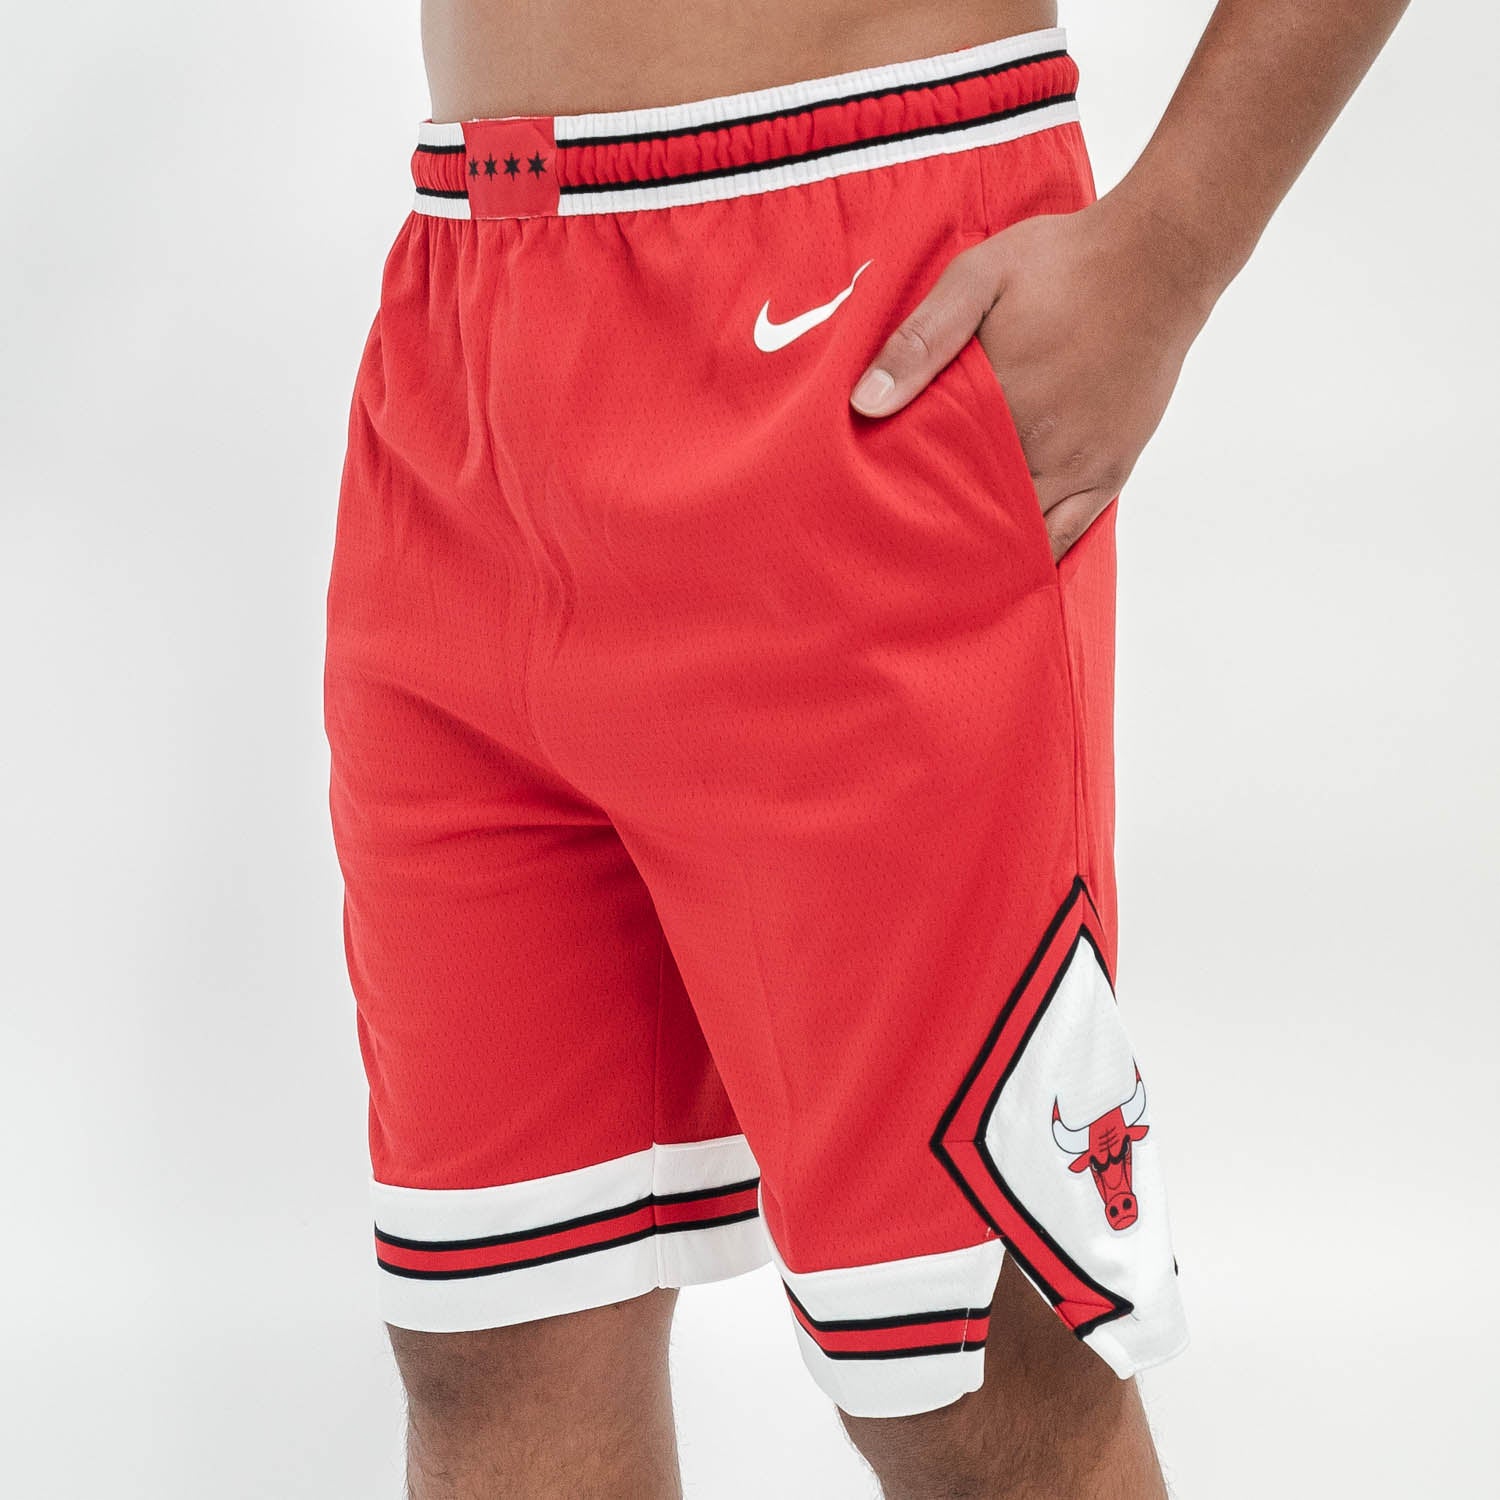 New Era Chicago Bulls NBA Sky Print shorts, black, red and white